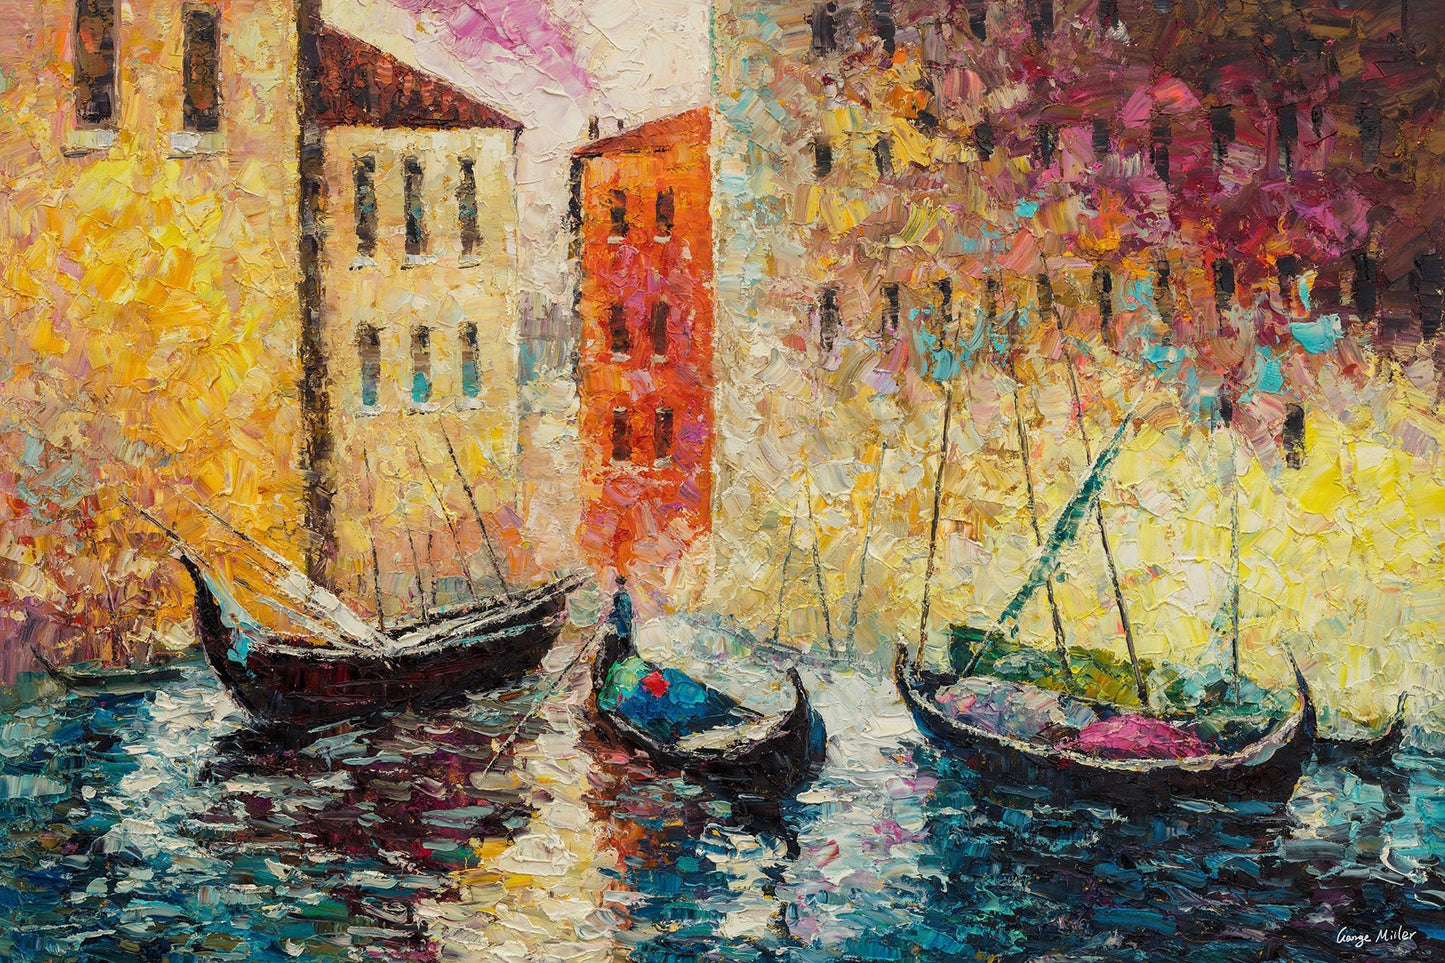 Oil Painting Venice Grand Canal Gondola Sunset, Original Abstract Painting, Abstract Painting, Large Landscape Painting, Living Room Decor